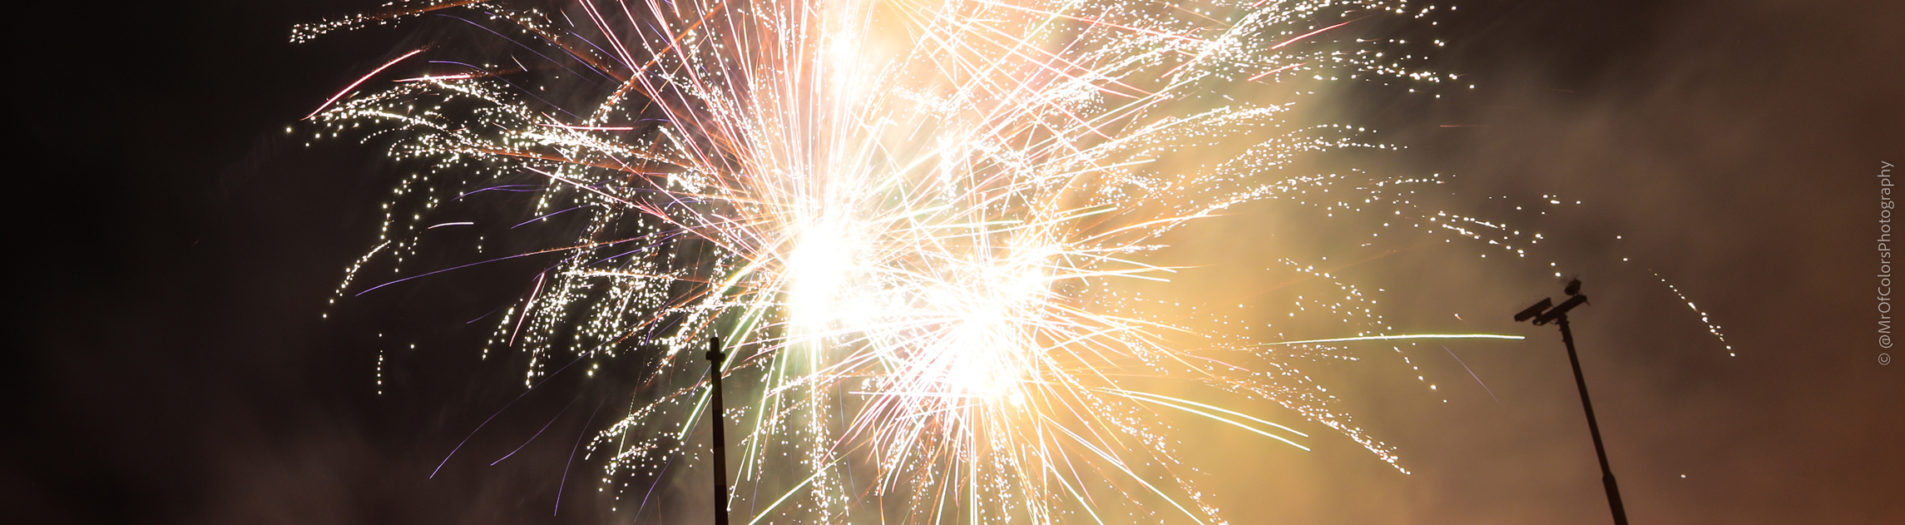 Photos Bommenberend Fireworks Show 27-08-2022 [Zuiderhaven/GroningenCity] by DillenvanderMolen @MrOfColorsPhotography